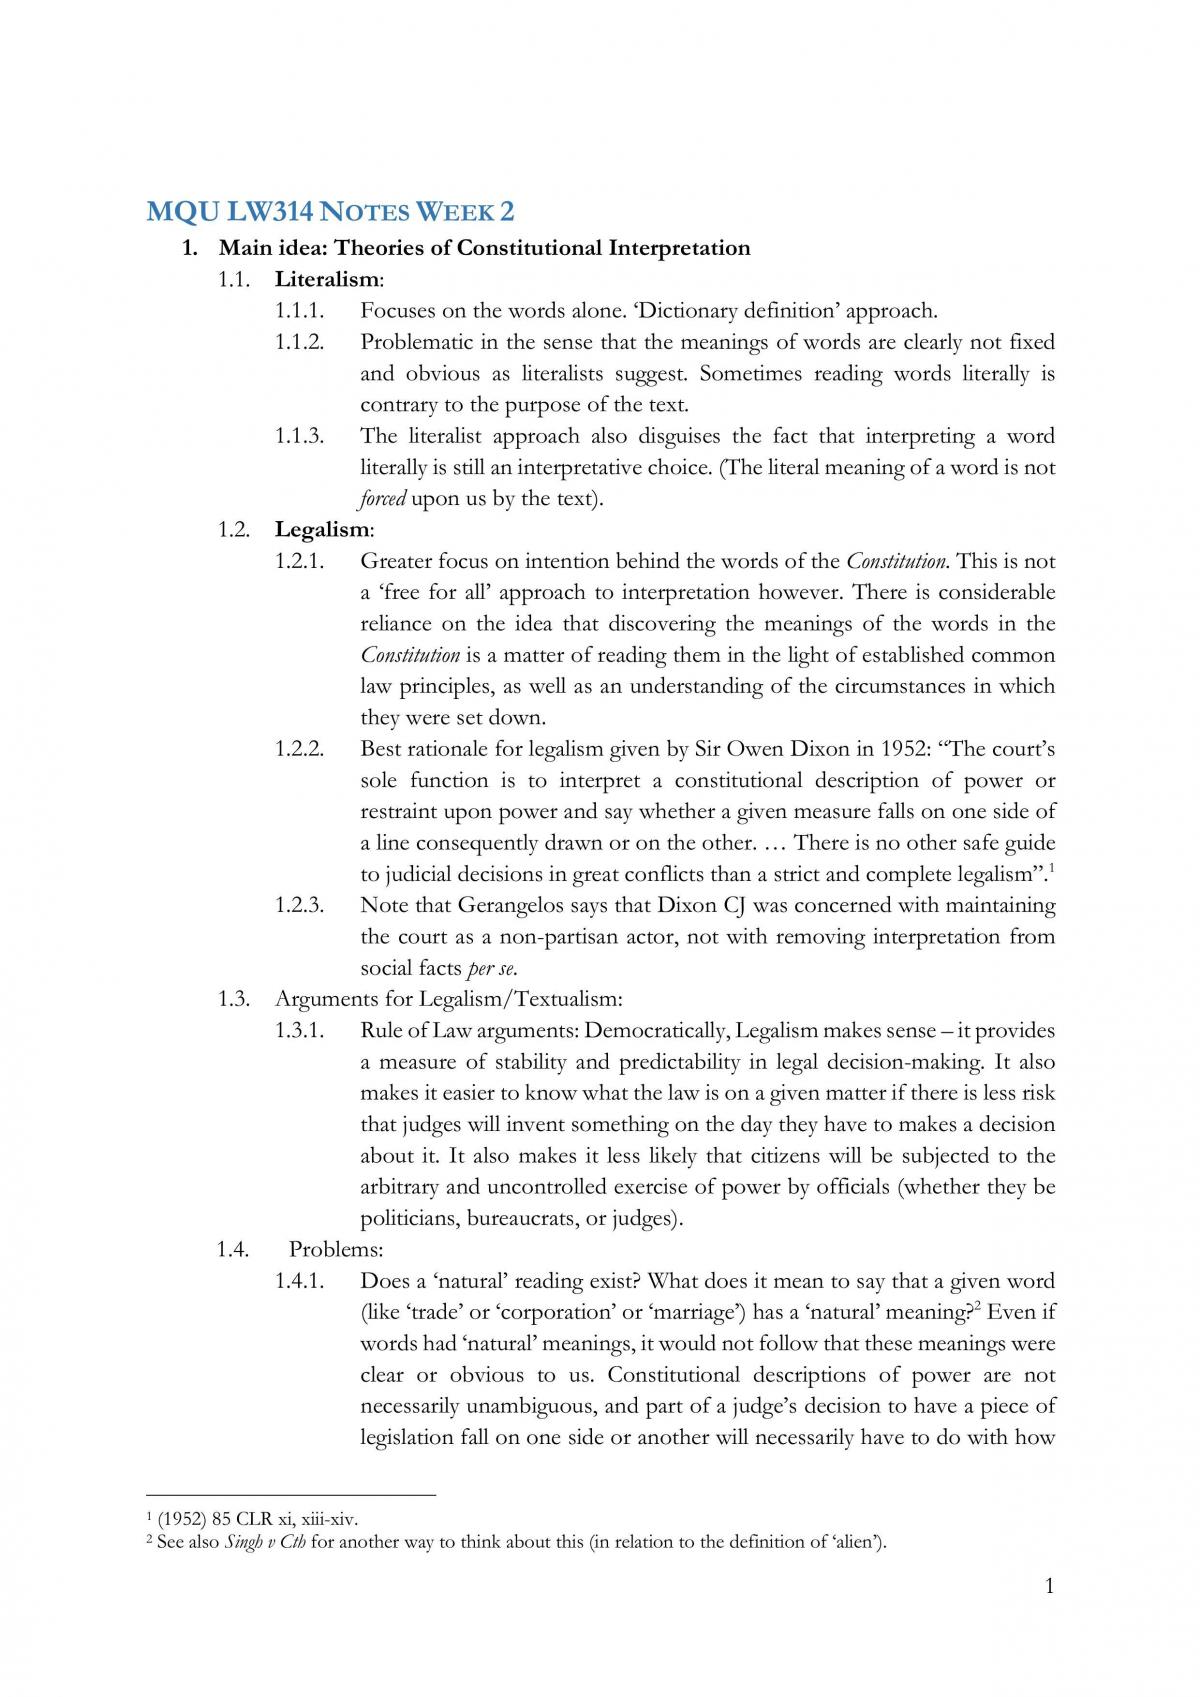 dissertation topics in constitutional law